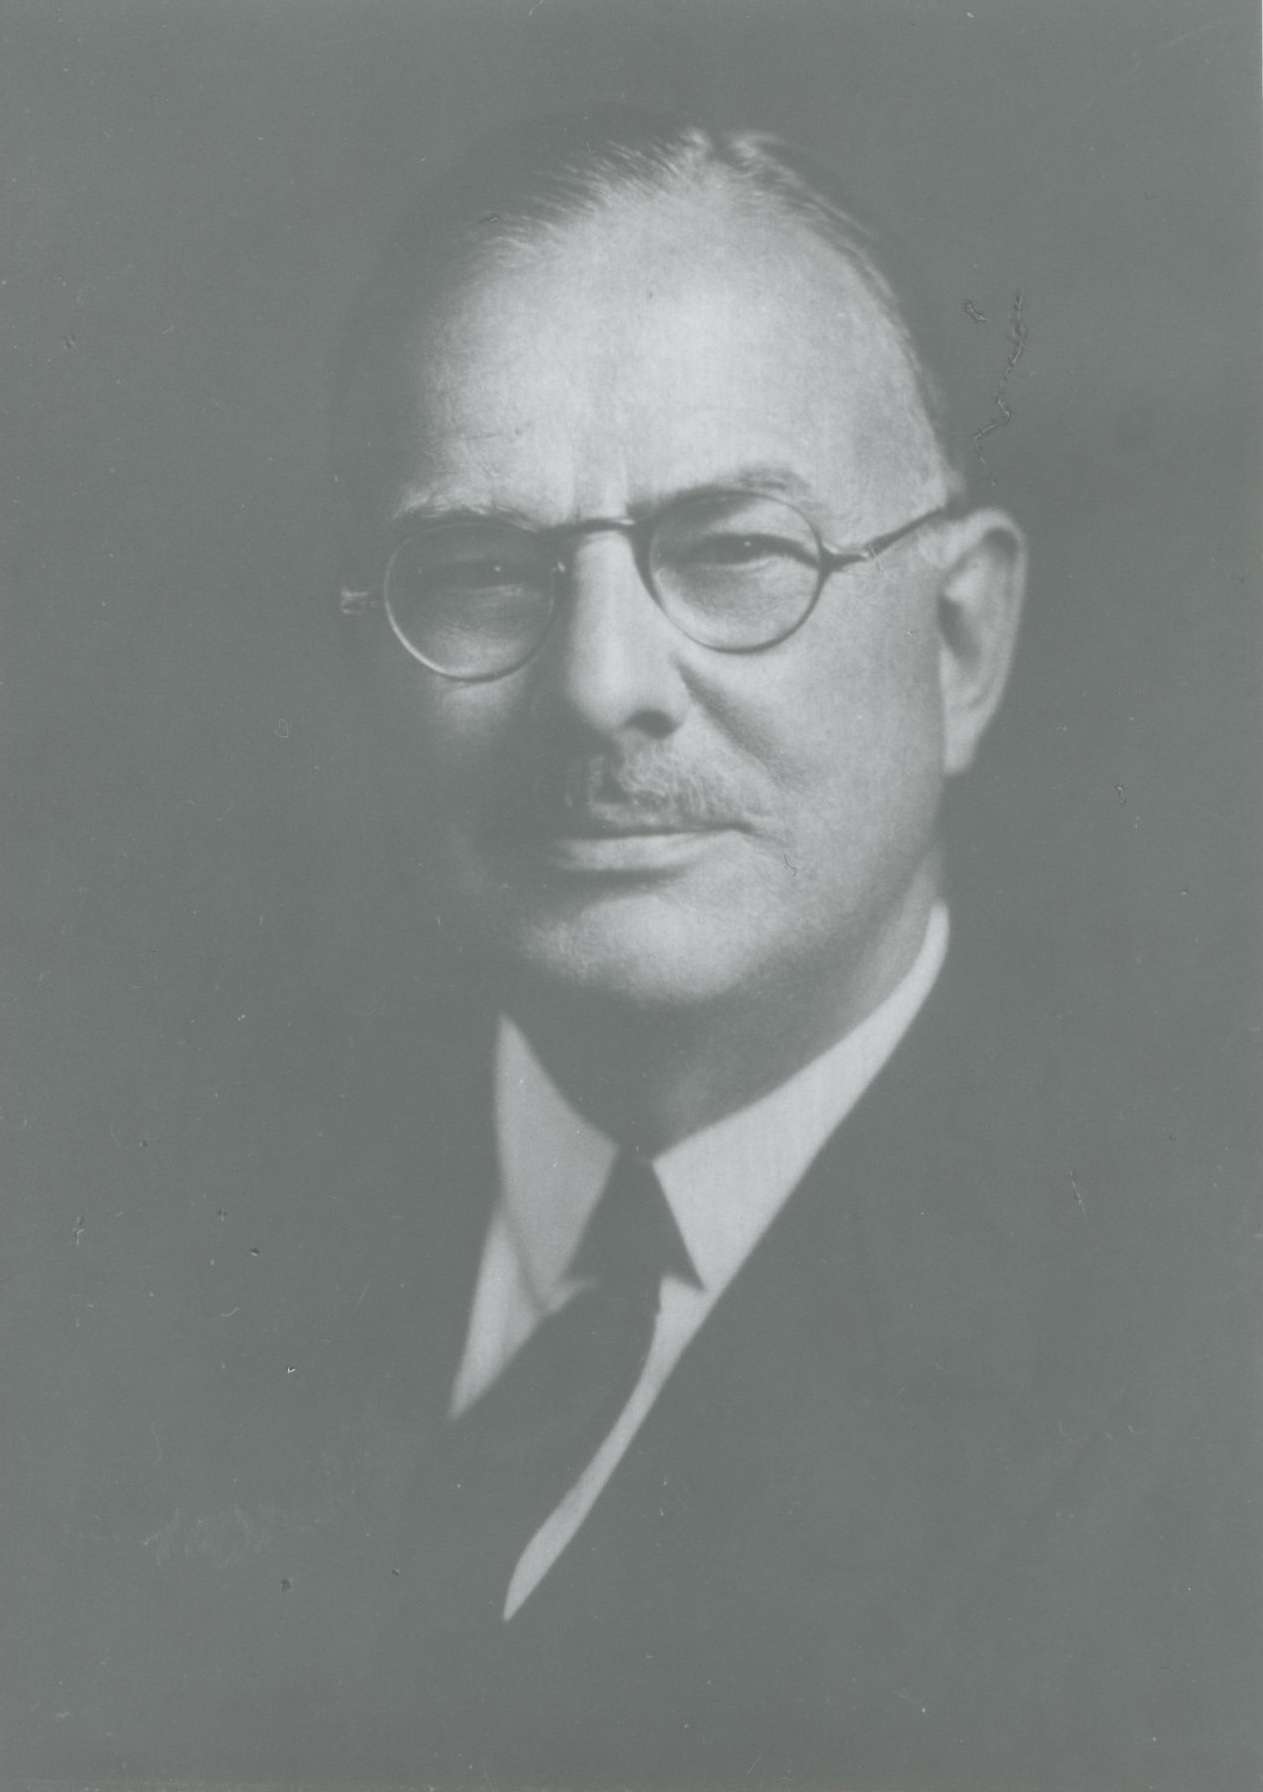 Motherwell’s father Robert Burns Motherwell II, ca. 1940